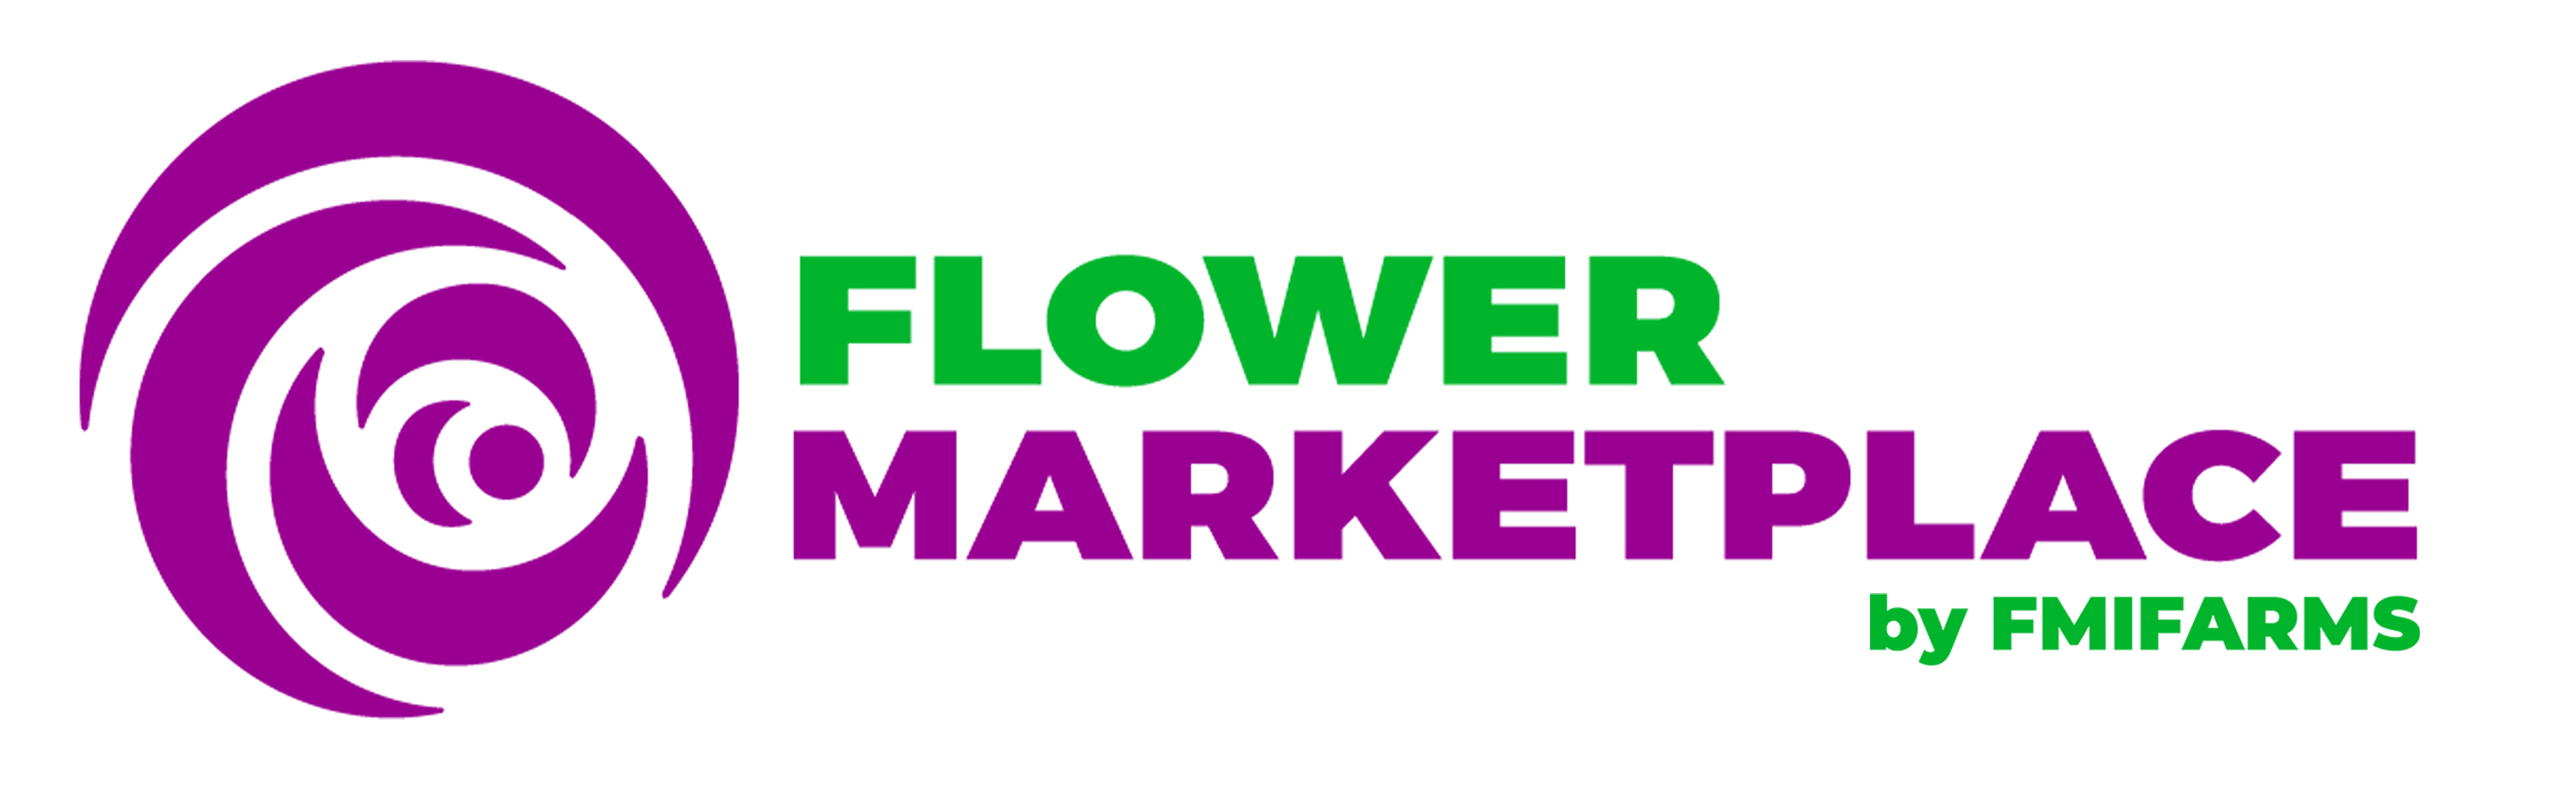 Flower Market Place logo